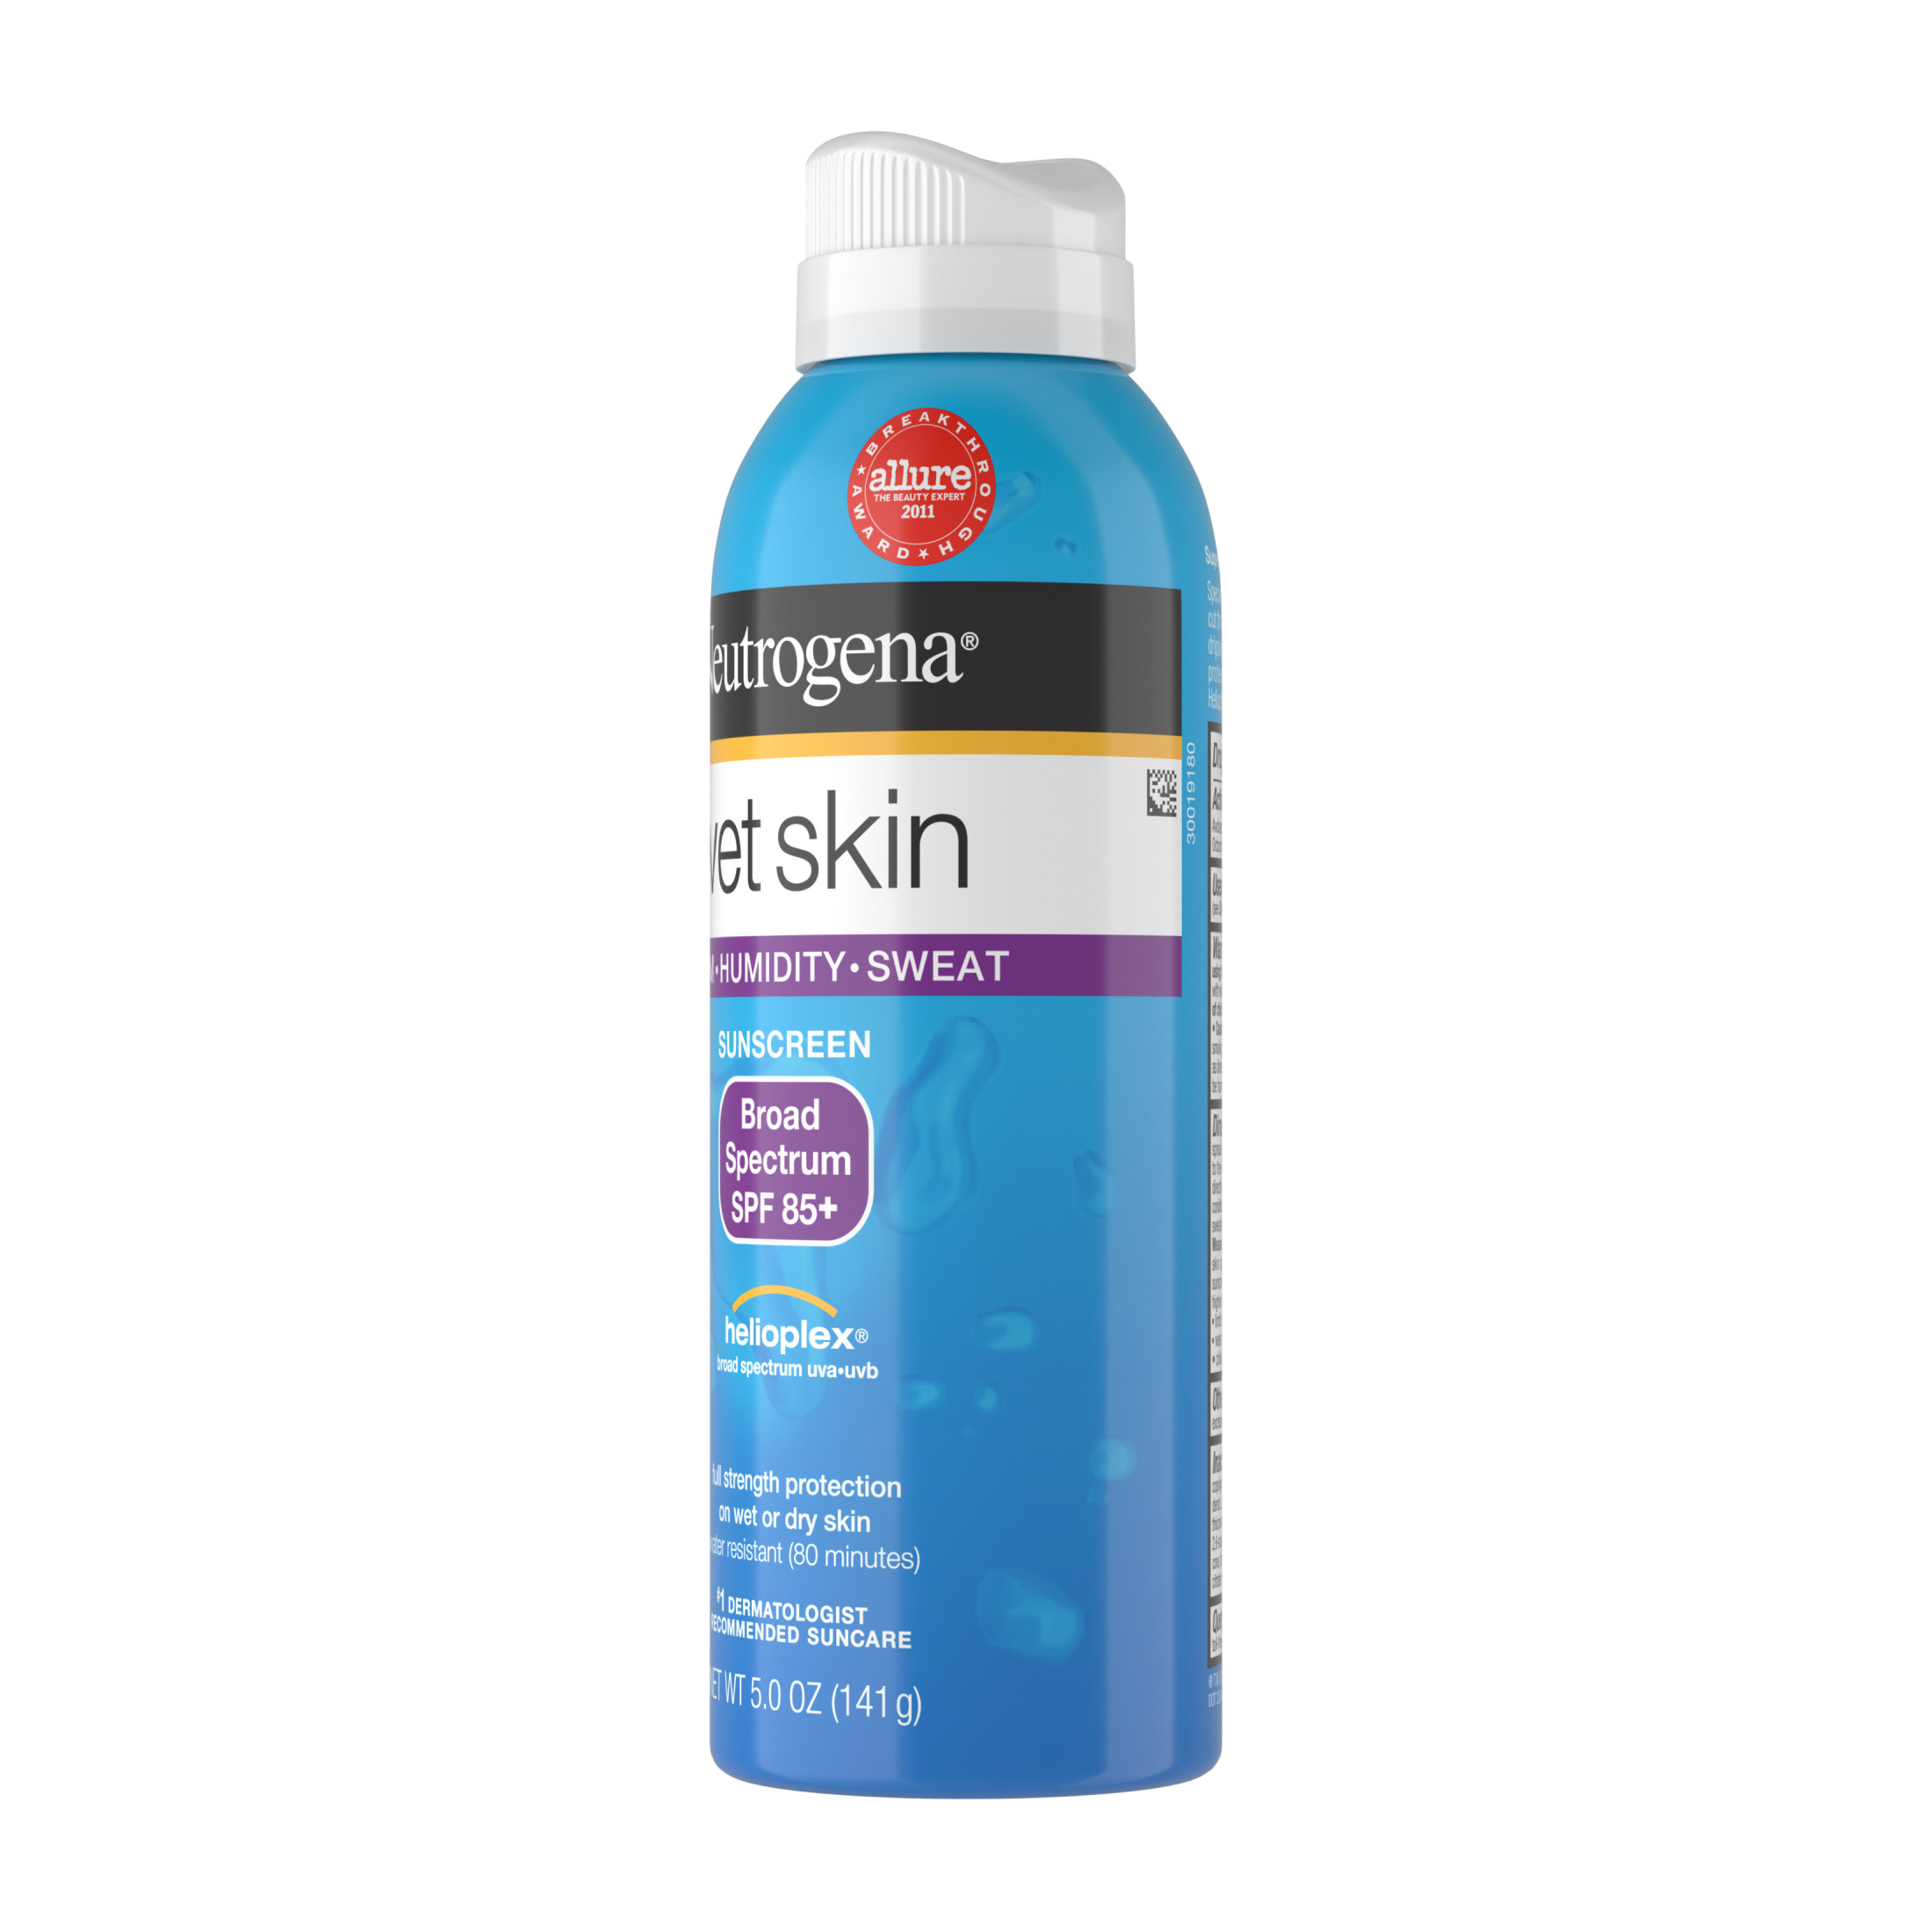 Neutrogena Wet Skin Sunscreen Spray Broad Spectrum SPF 85+, 5 oz - image 4 of 6